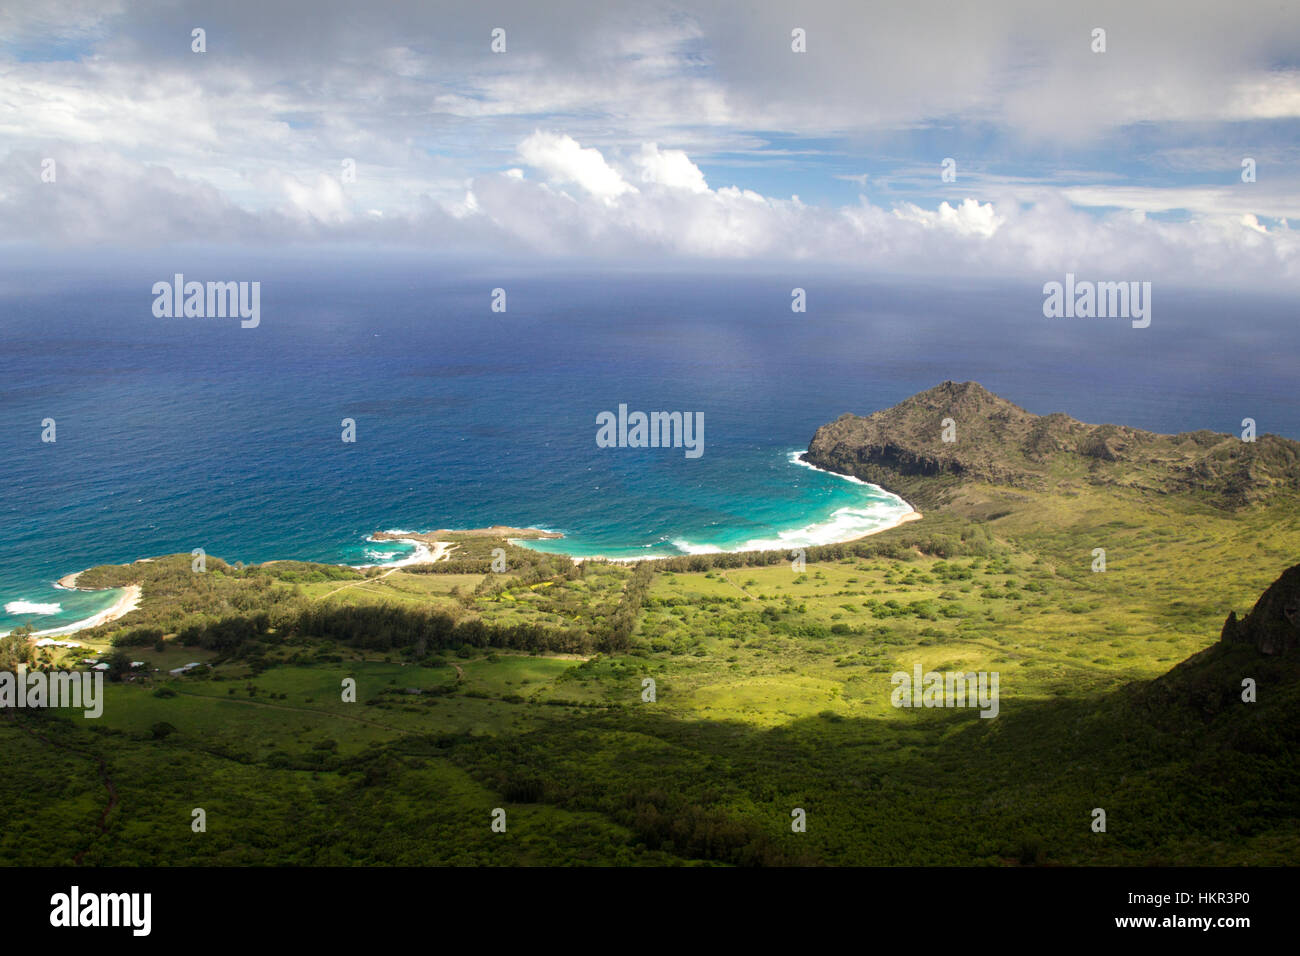 Aerial view of East Coast of Kauai, Hawaii, USA near Lihue. Stock Photo